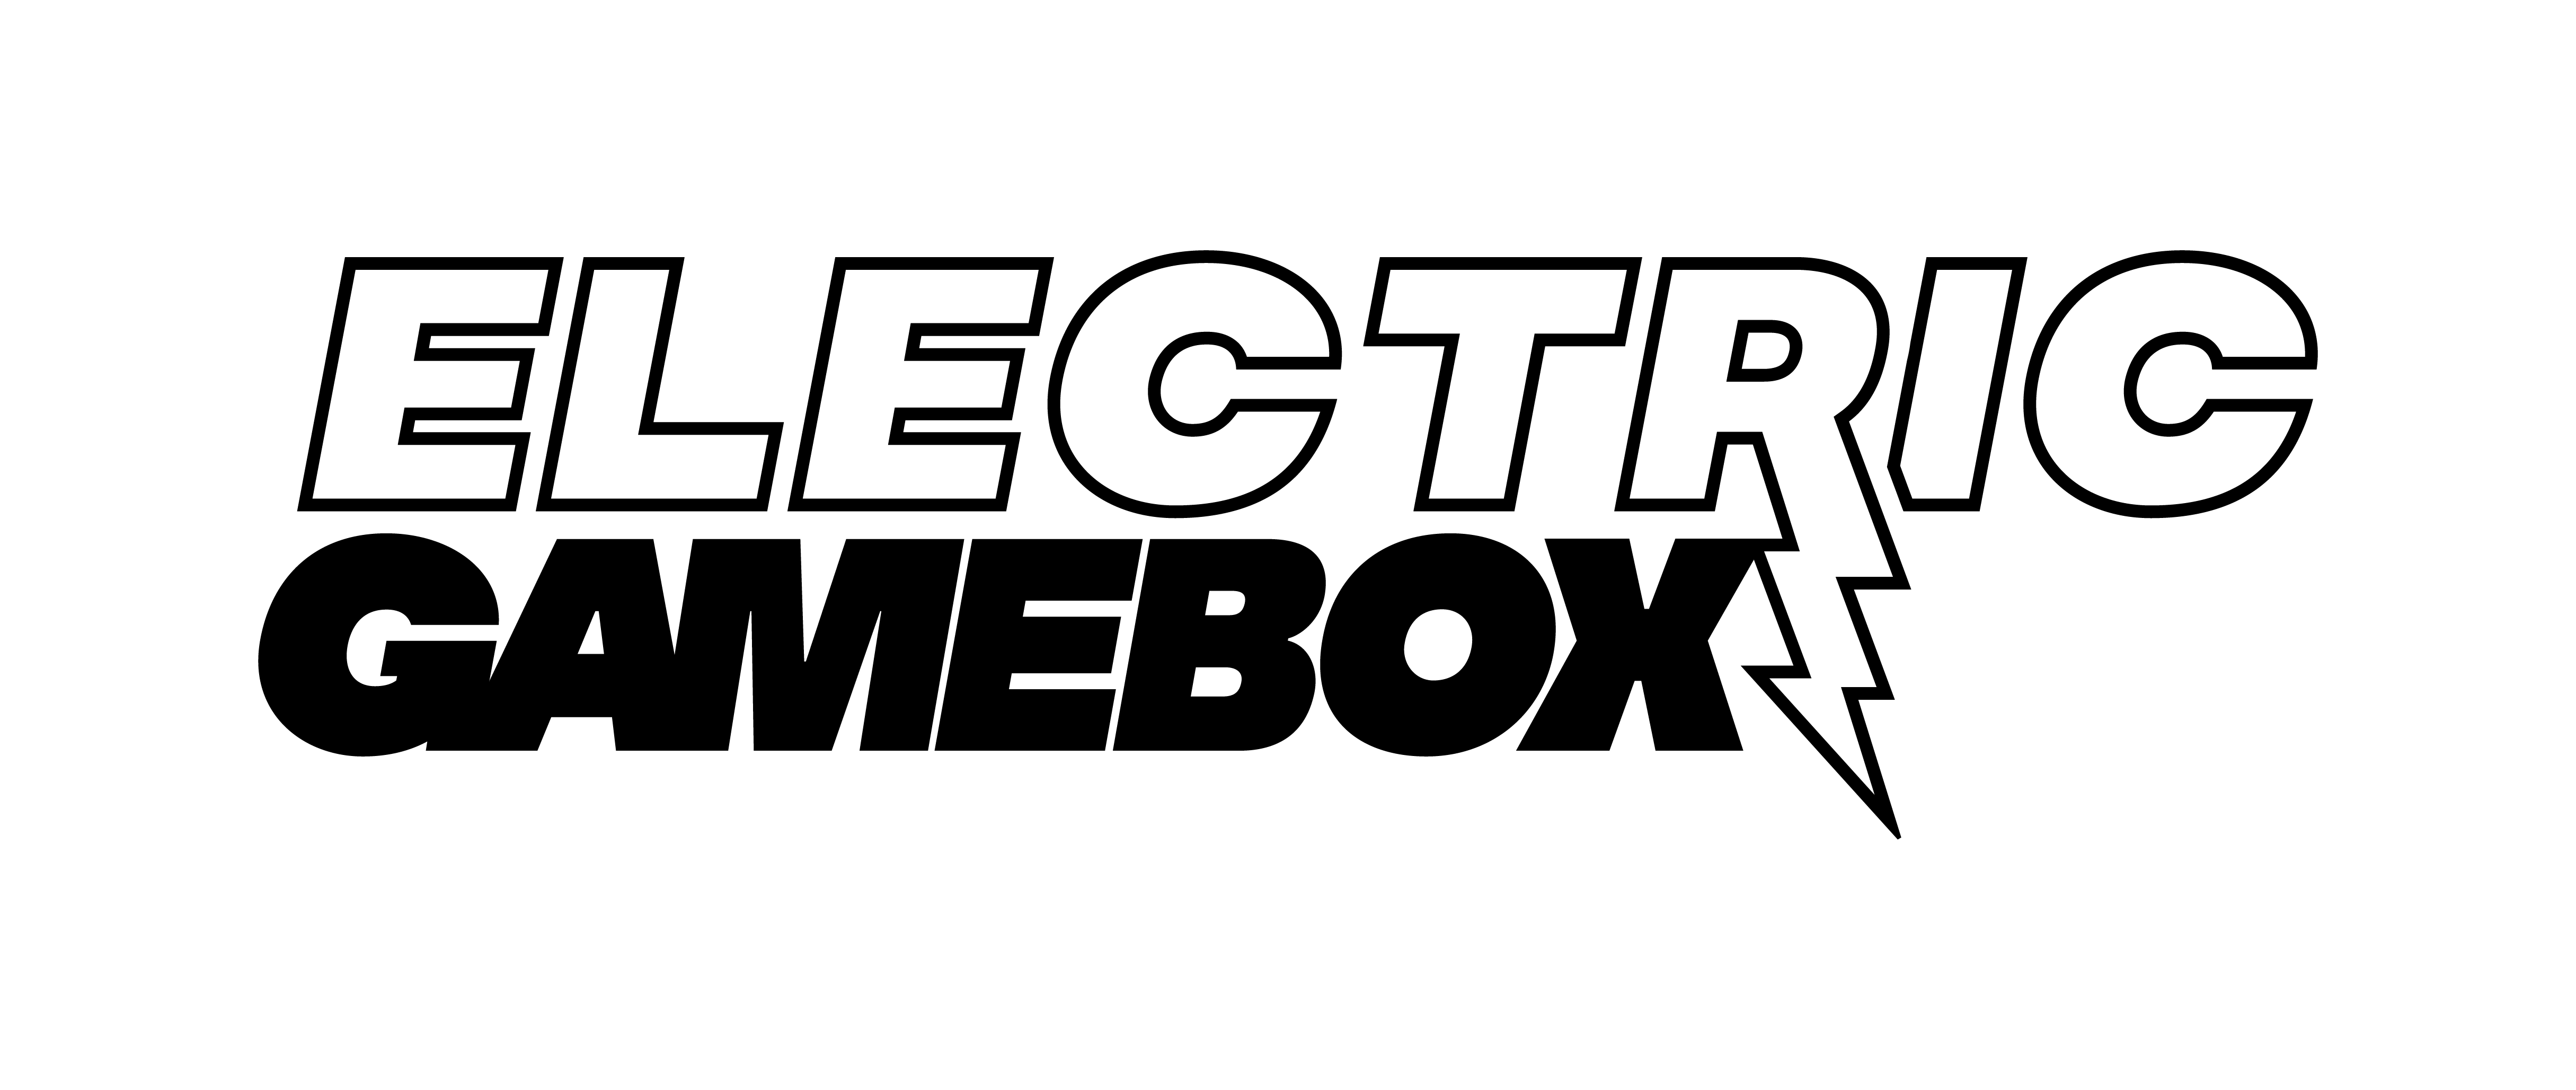 Electric Gamebox Logo